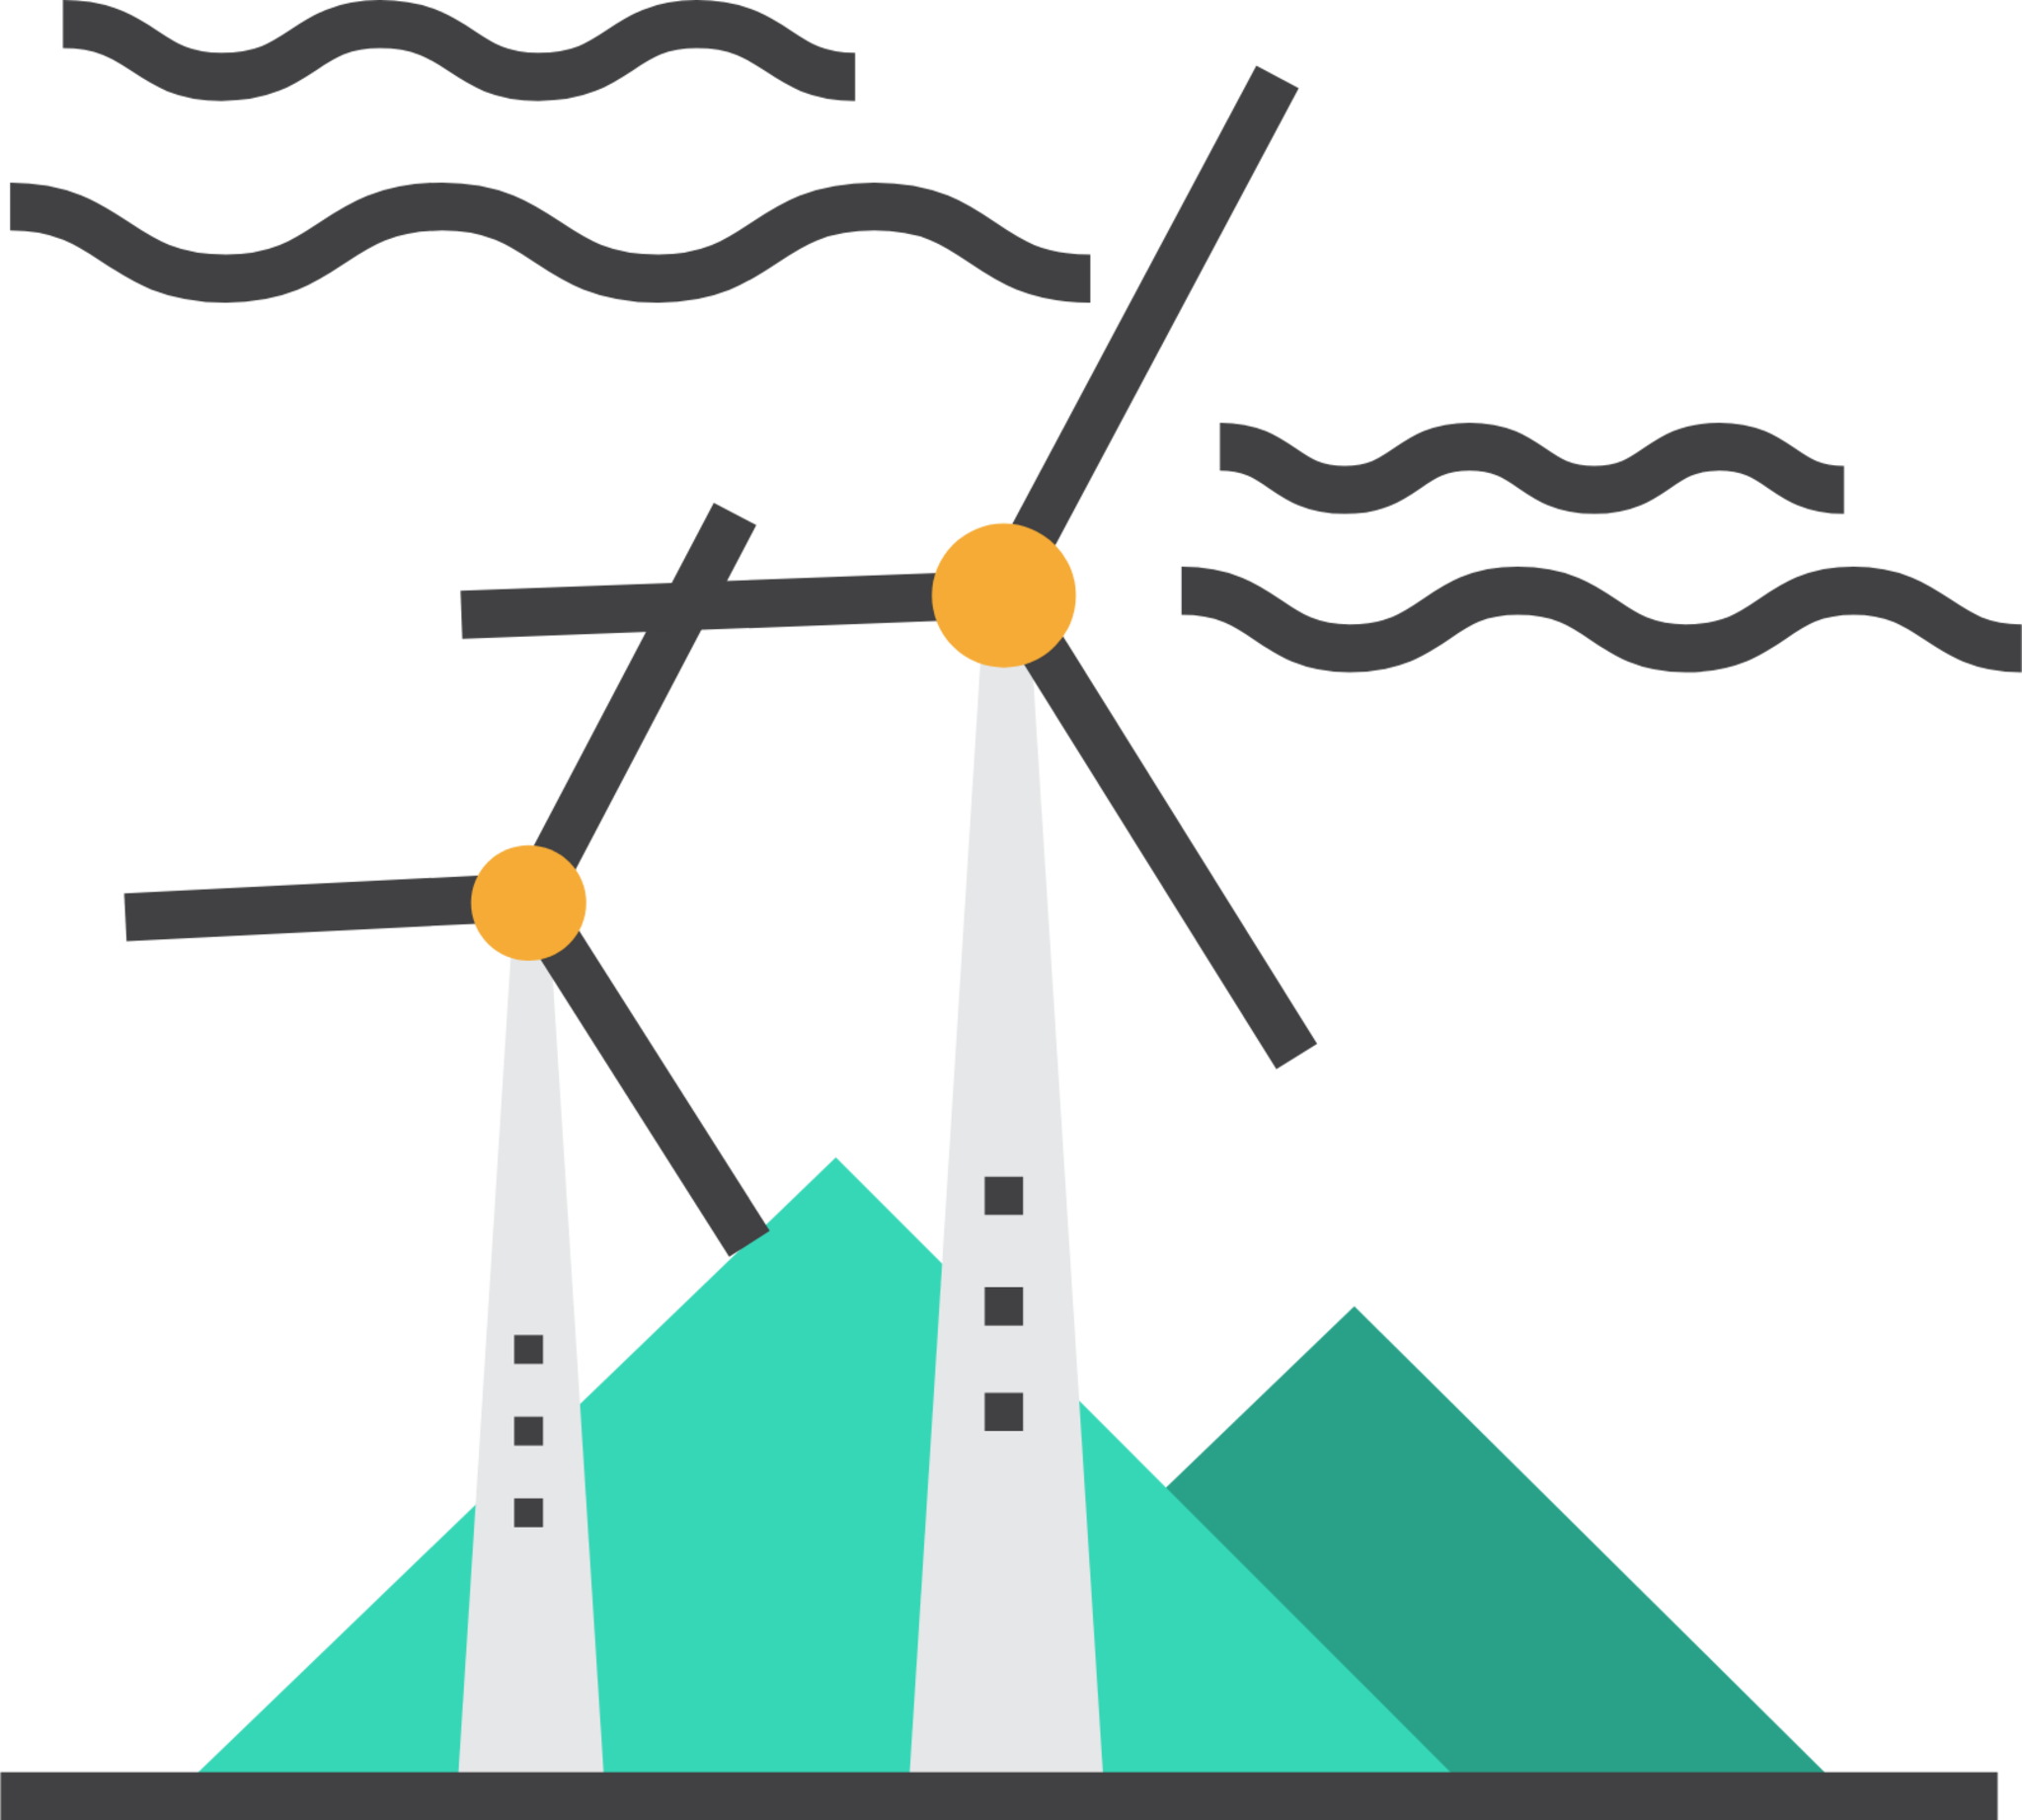 wind turbine icon